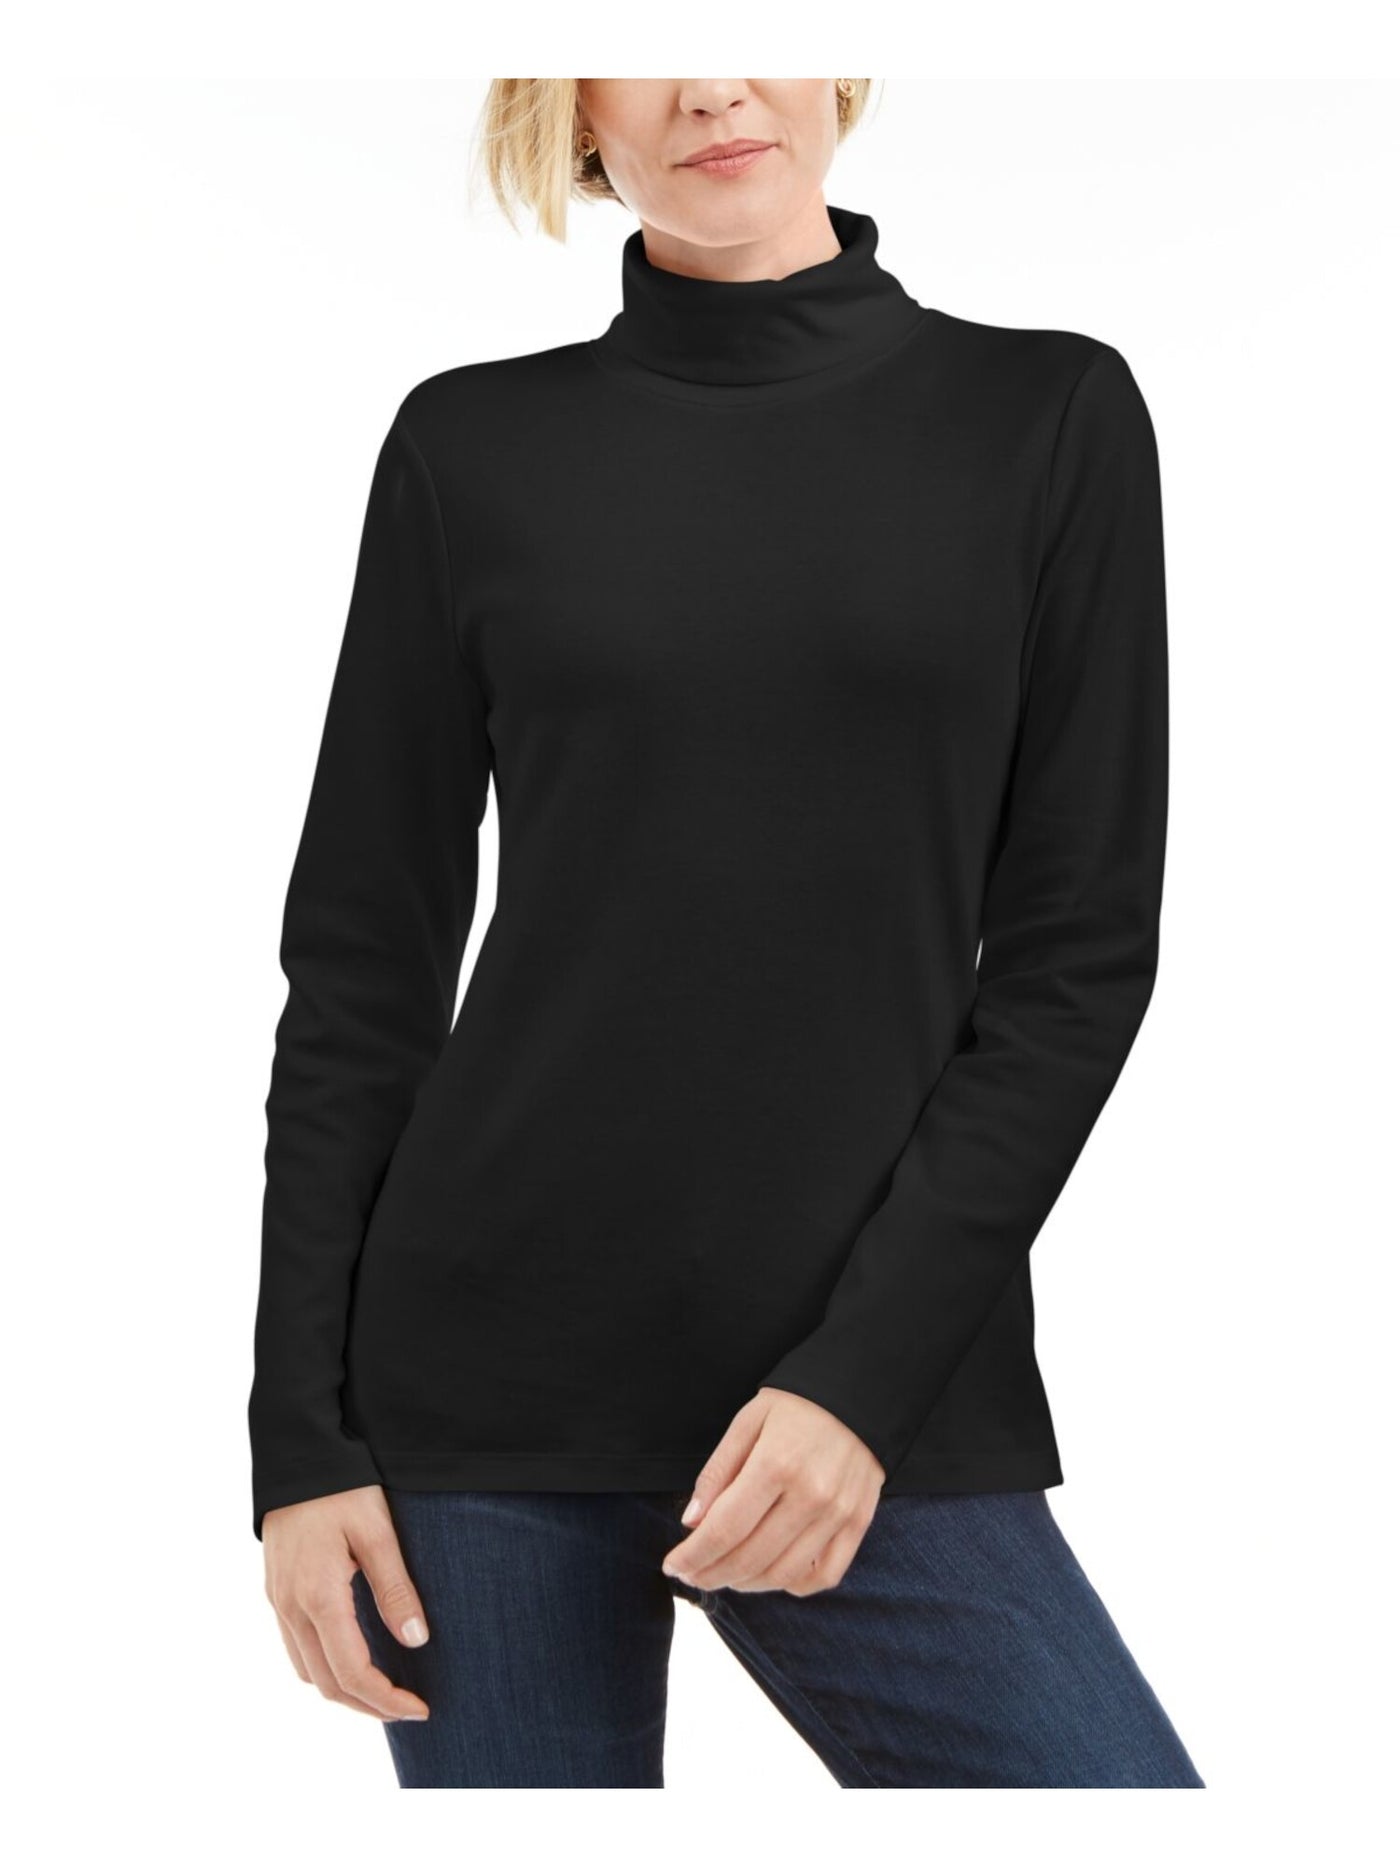 KAREN SCOTT SPORT Womens Black Stretch Ribbed Cuffed Long Sleeve Turtle Neck Wear To Work Sweater XS